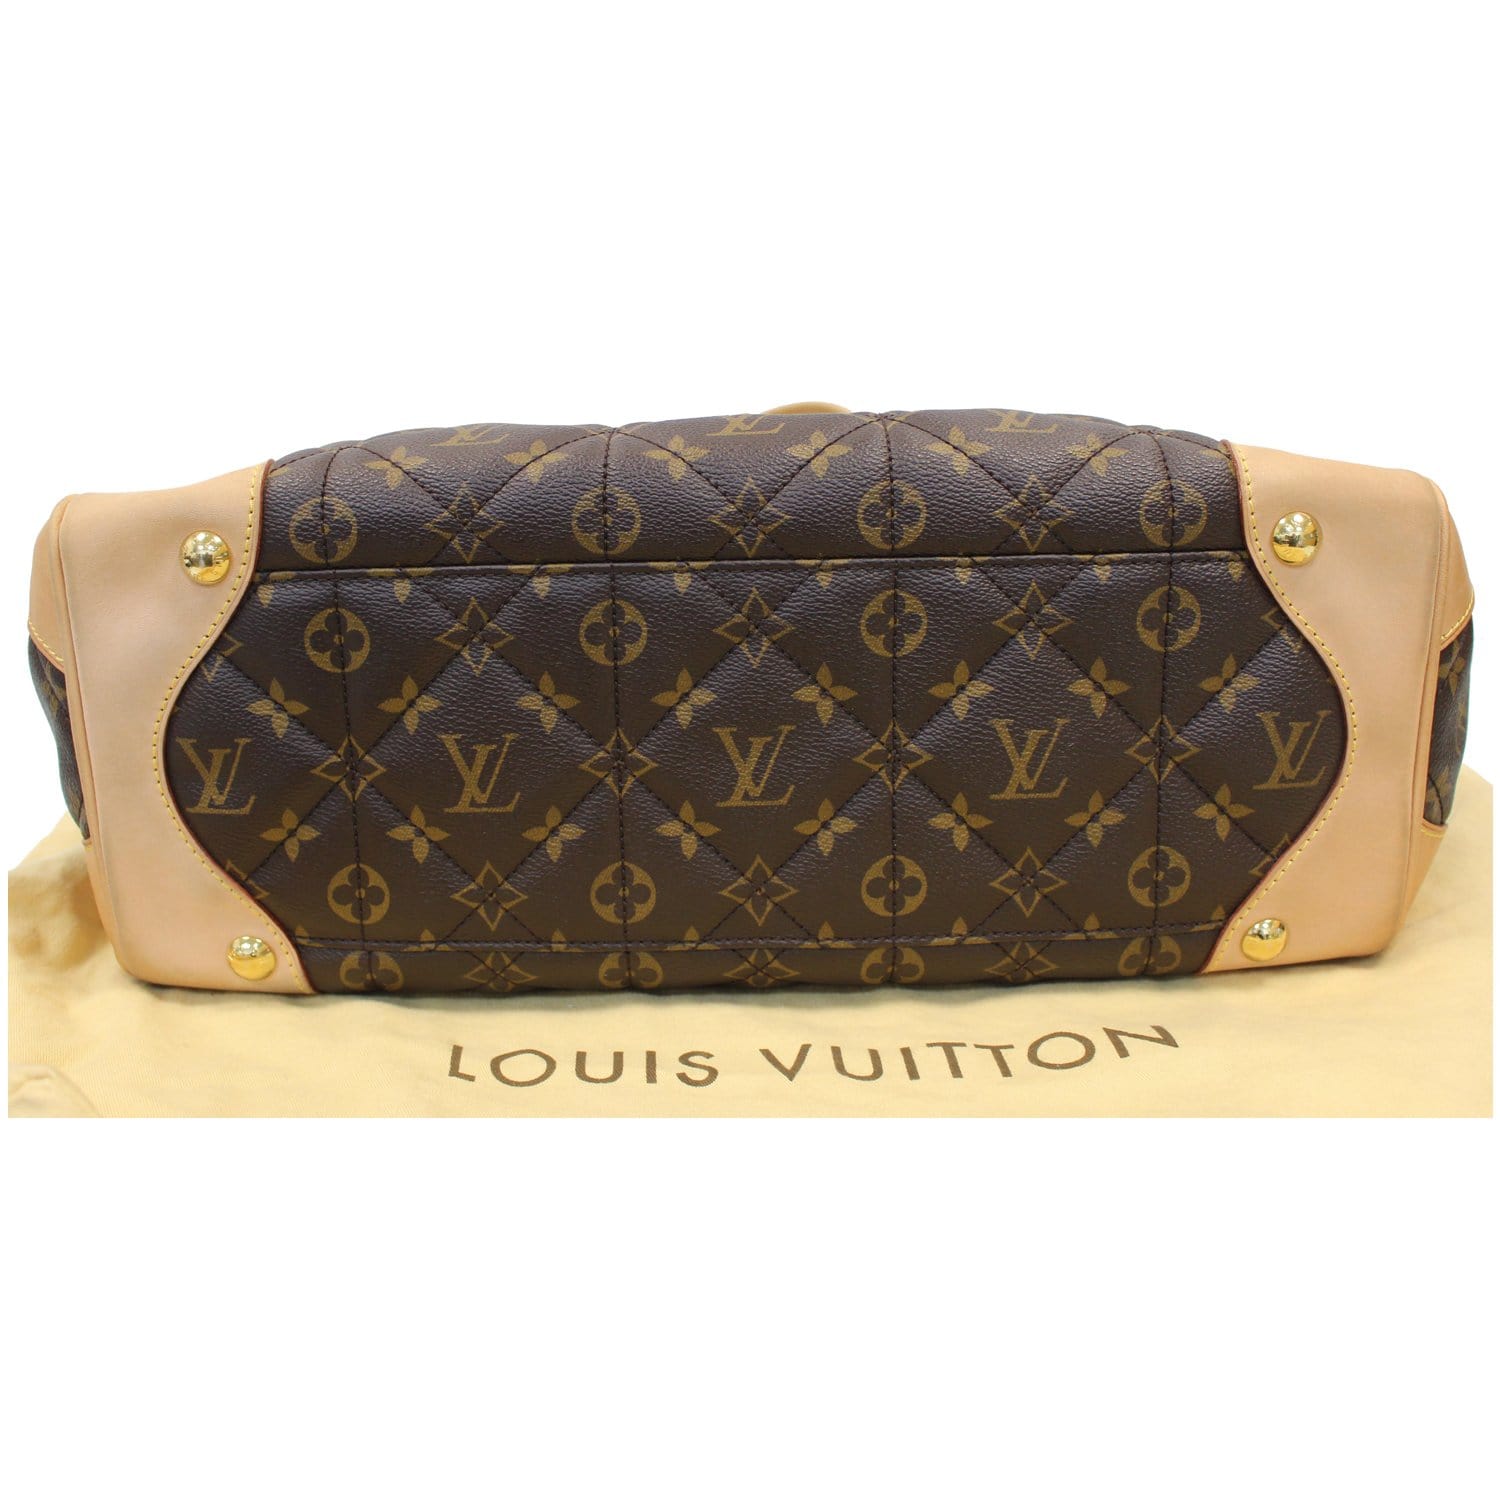 Personal Shopper 🇬🇧 on Instagram: “🗣New Louis Vuitton”